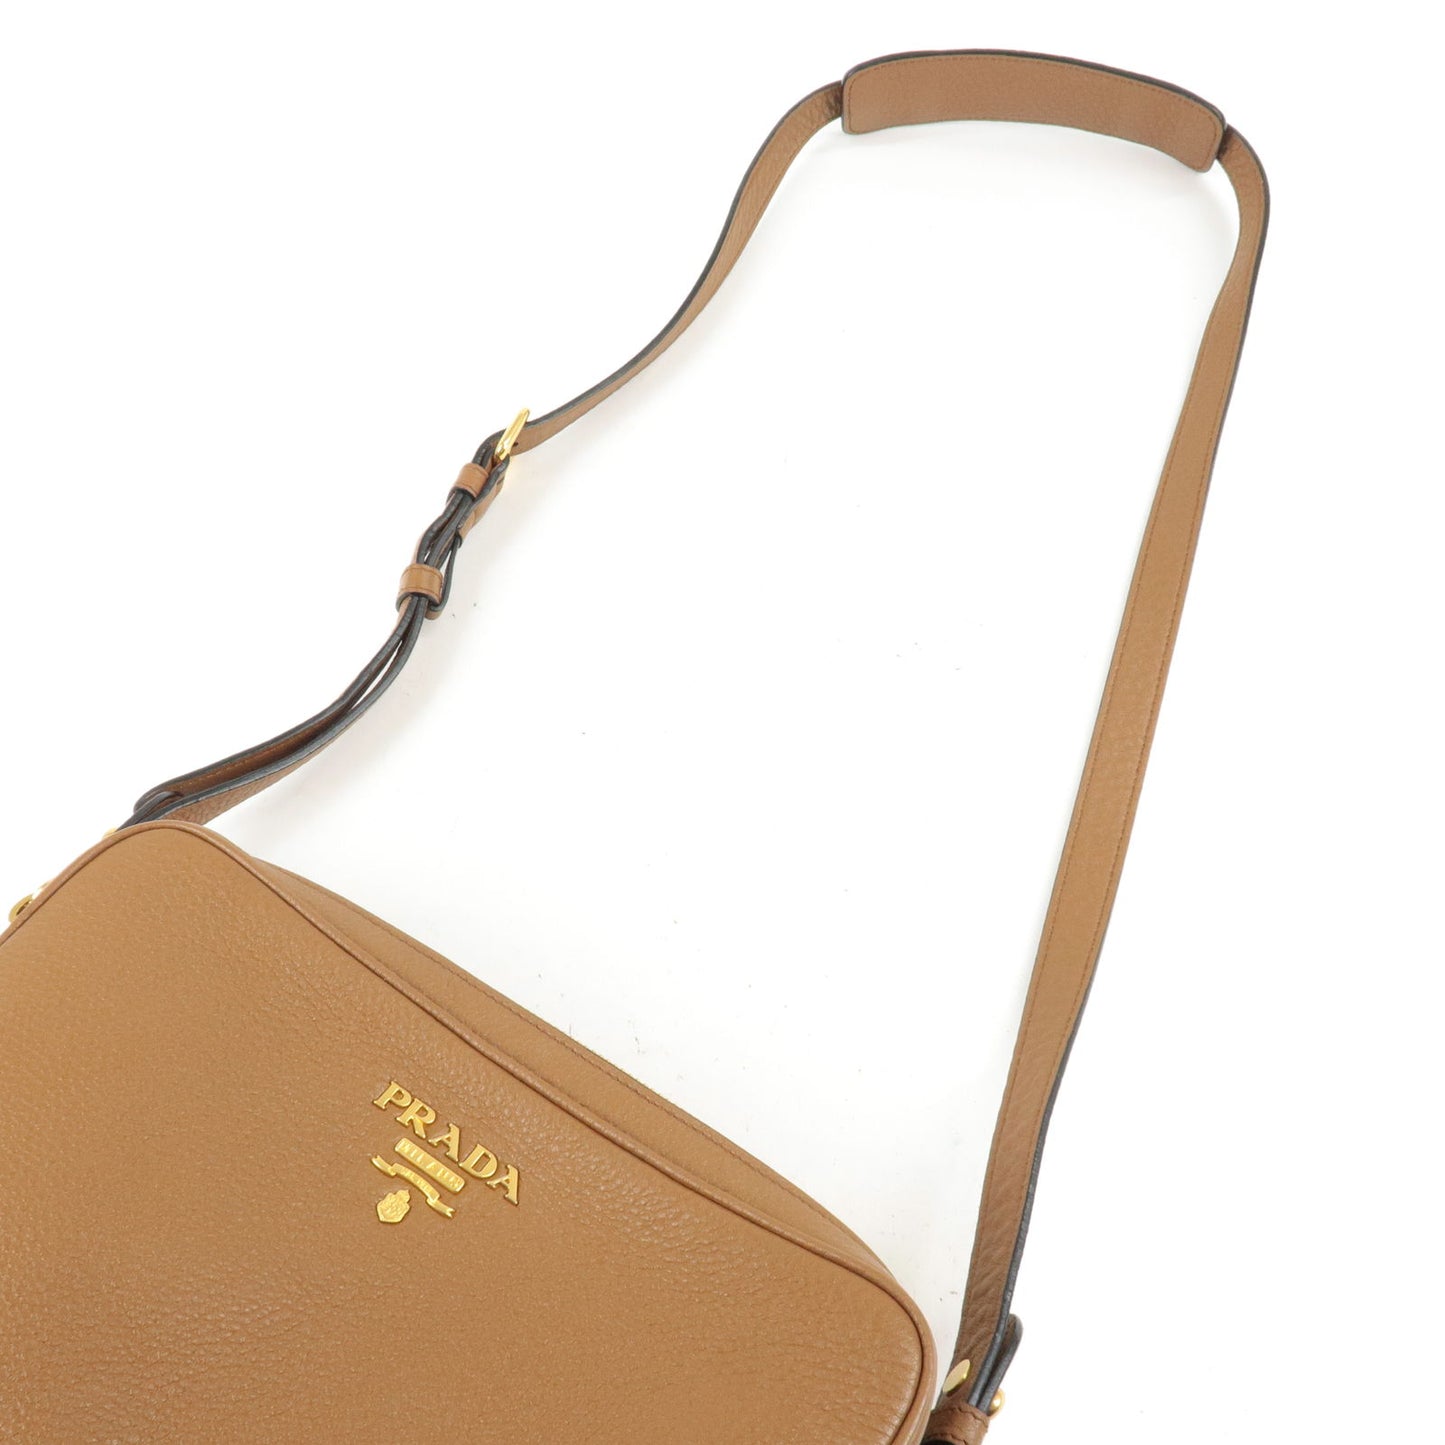 PRADA Logo Leather Shoulder Bag Crossbody Bag Brown 1BH079